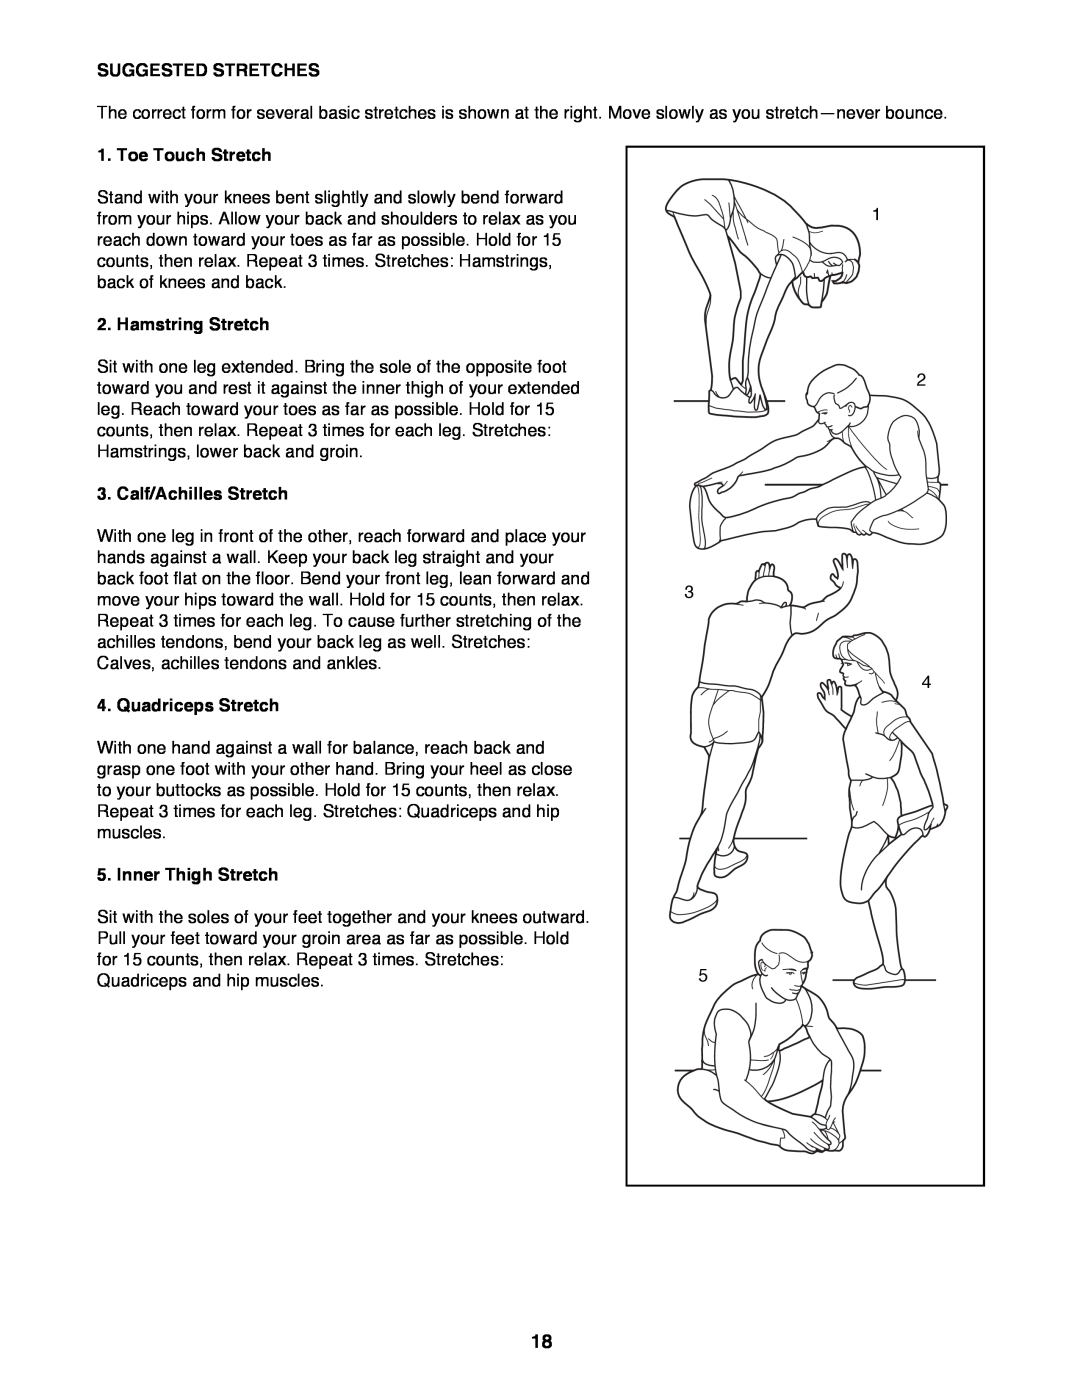 ProForm 831.297791 Suggested Stretches, Toe Touch Stretch, Hamstring Stretch, Calf/Achilles Stretch, Quadriceps Stretch 